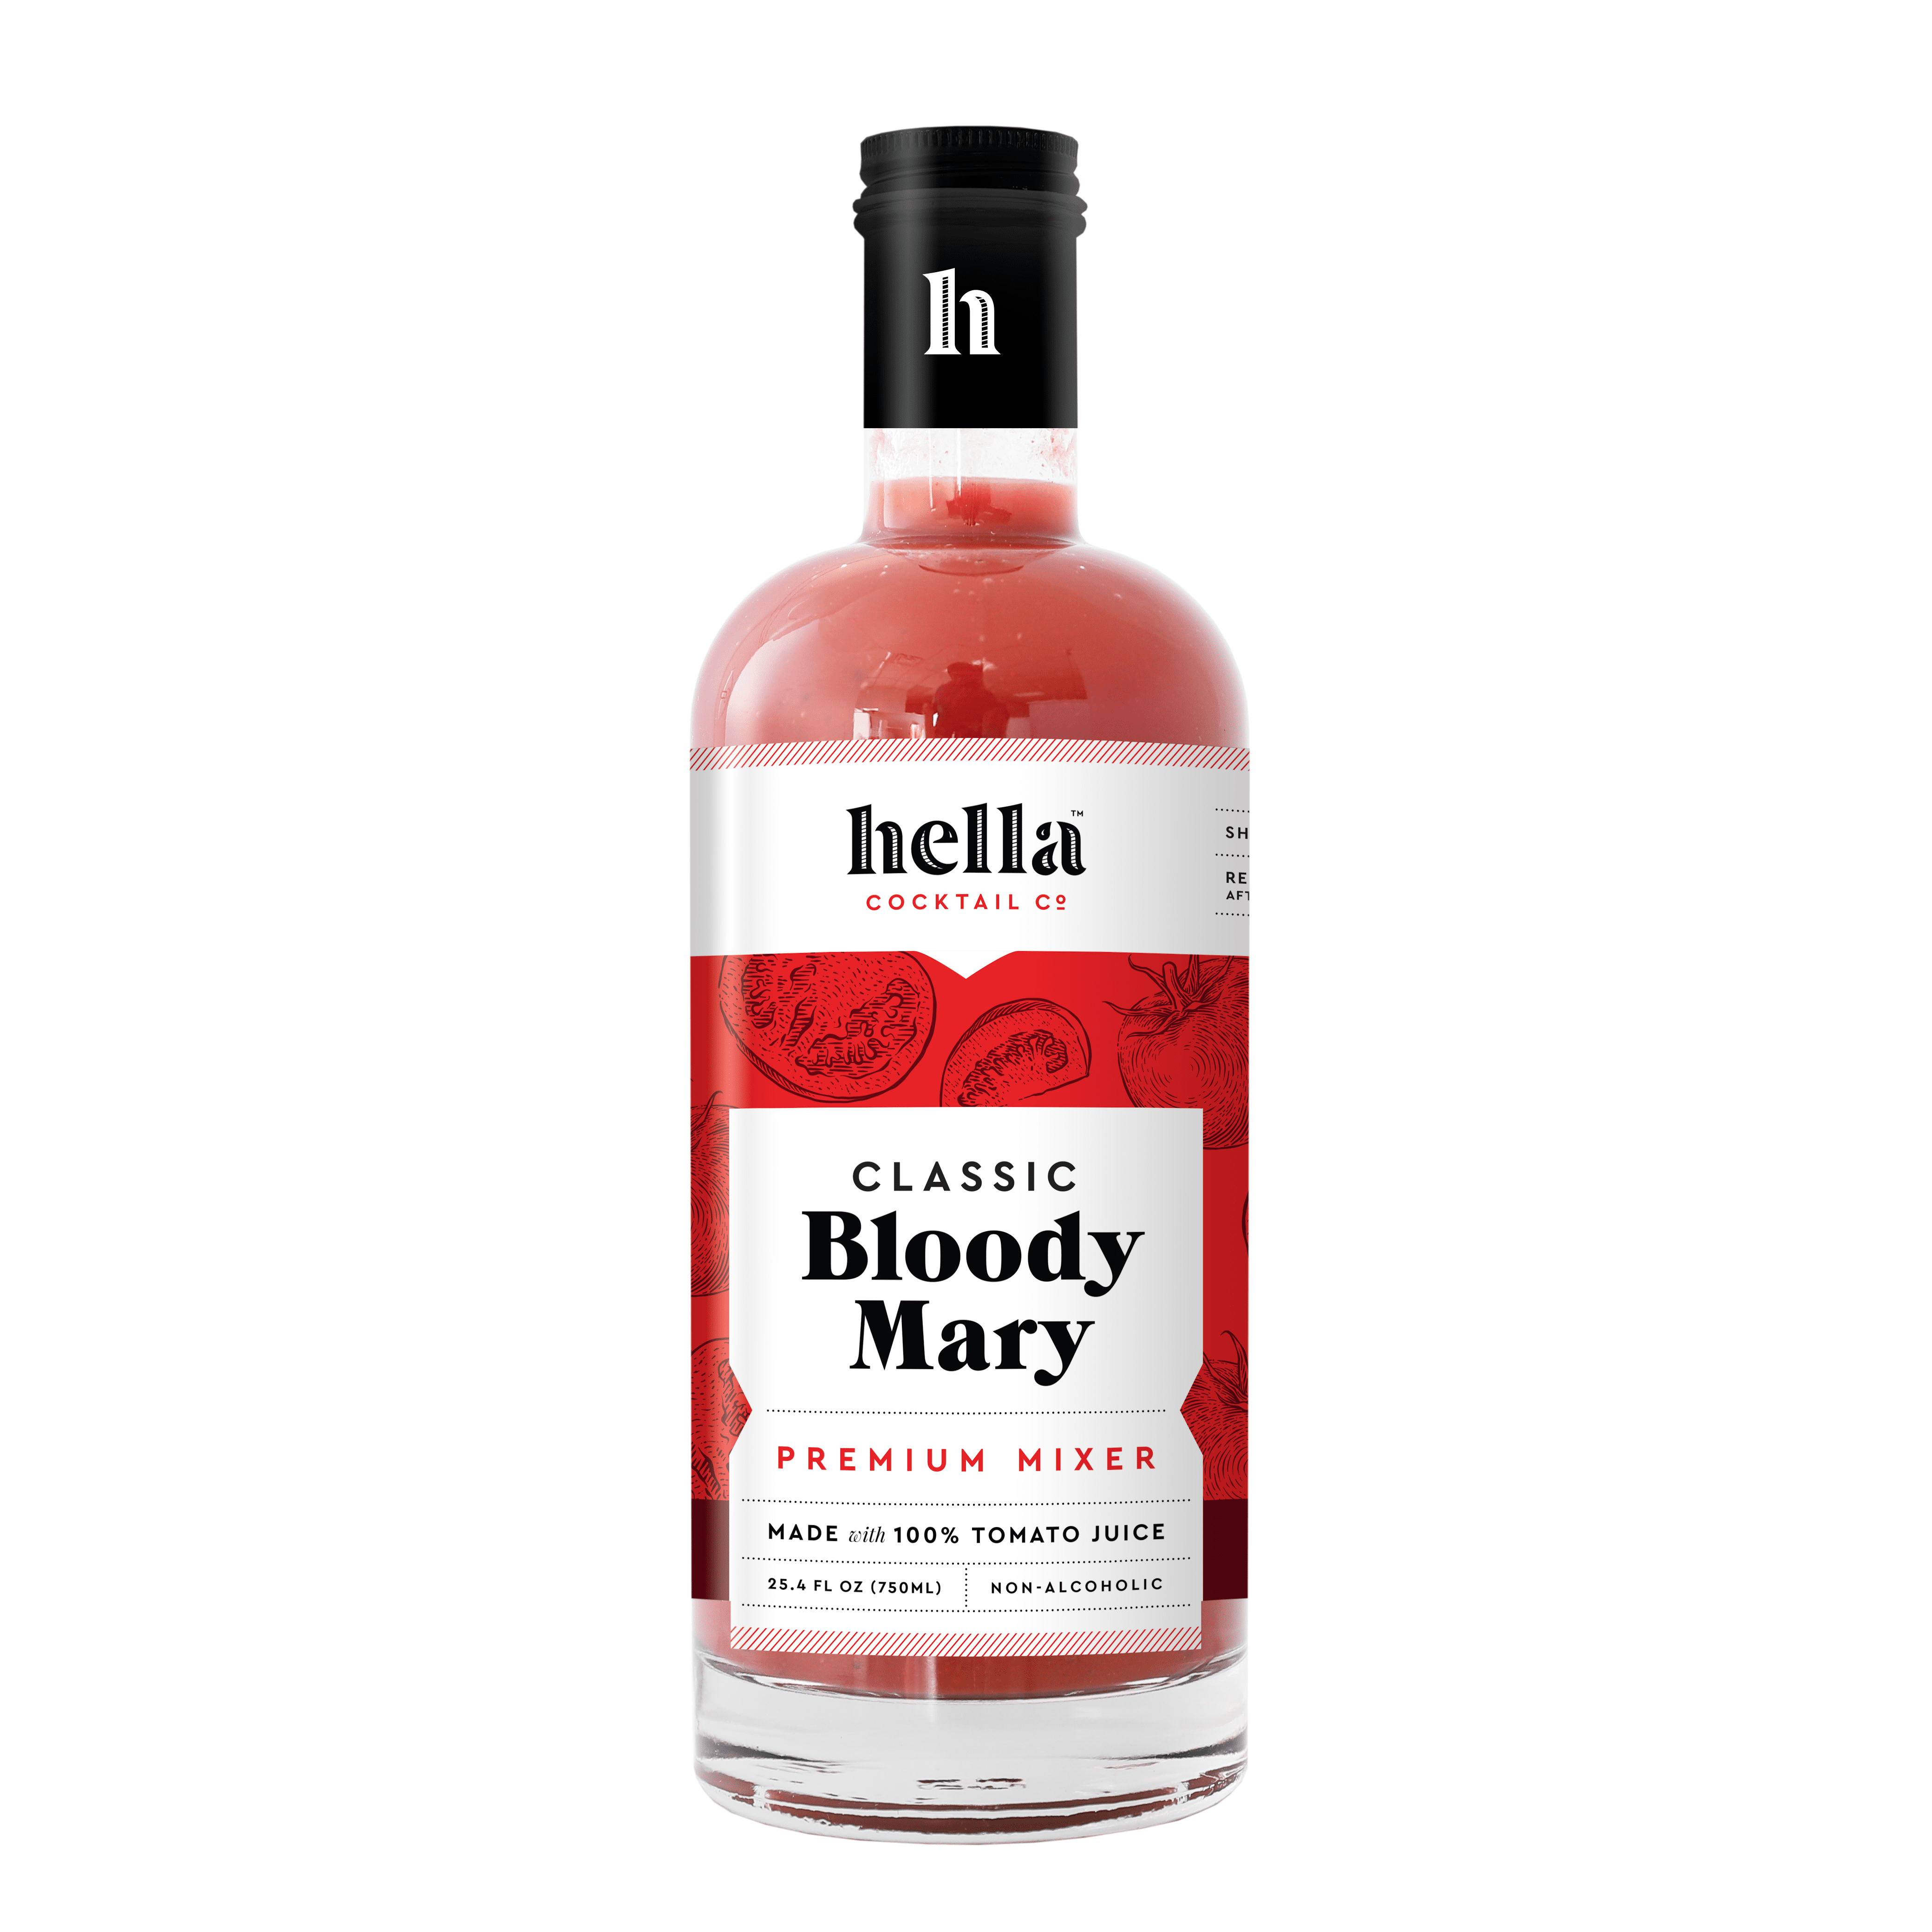 Hella Bloody Mary Premium Mixer (750 ml) 6 units per case 3.5 lbs